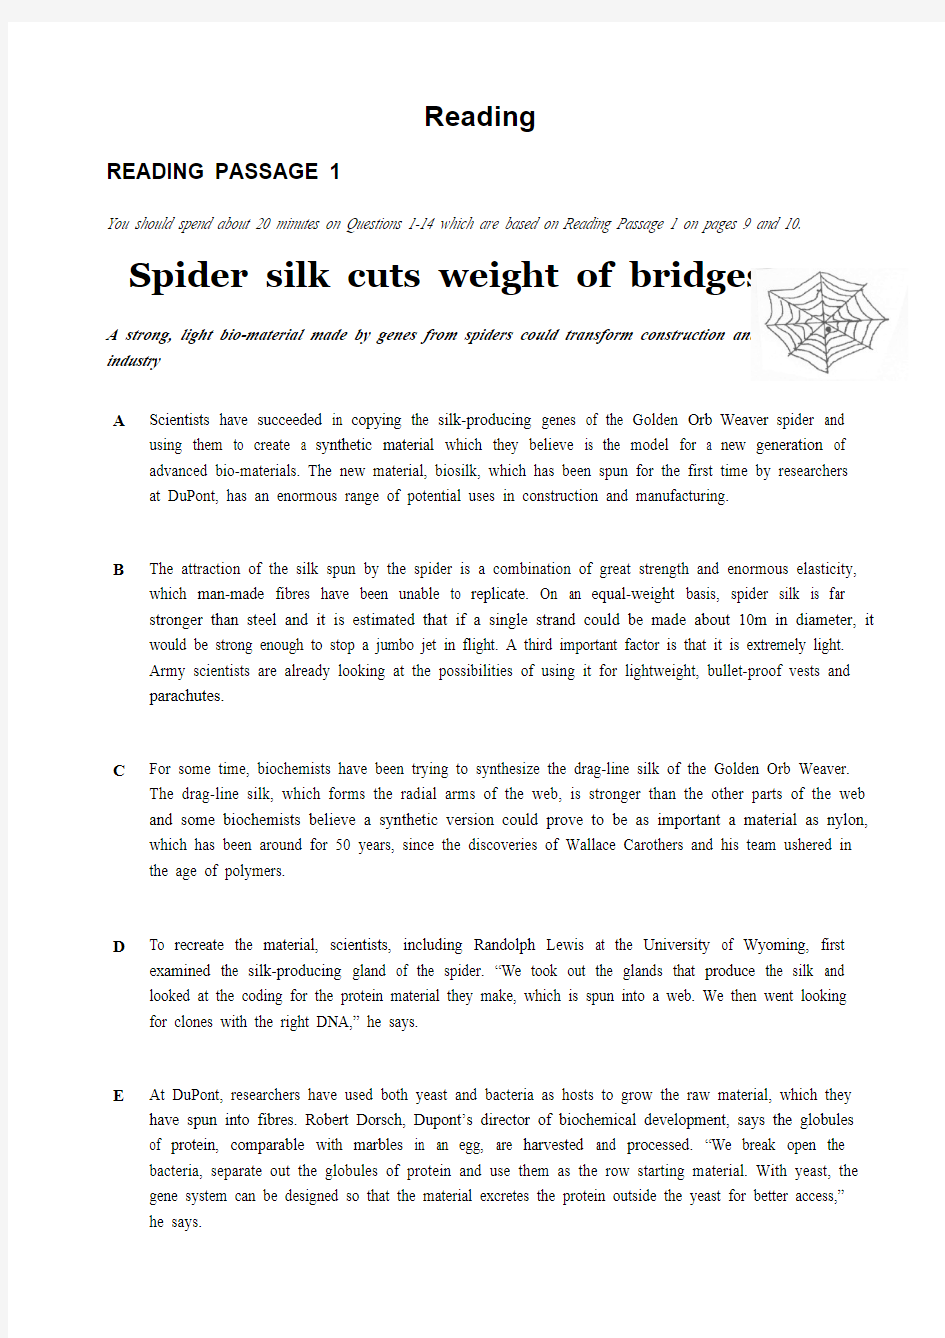 雅思模拟考试 spider